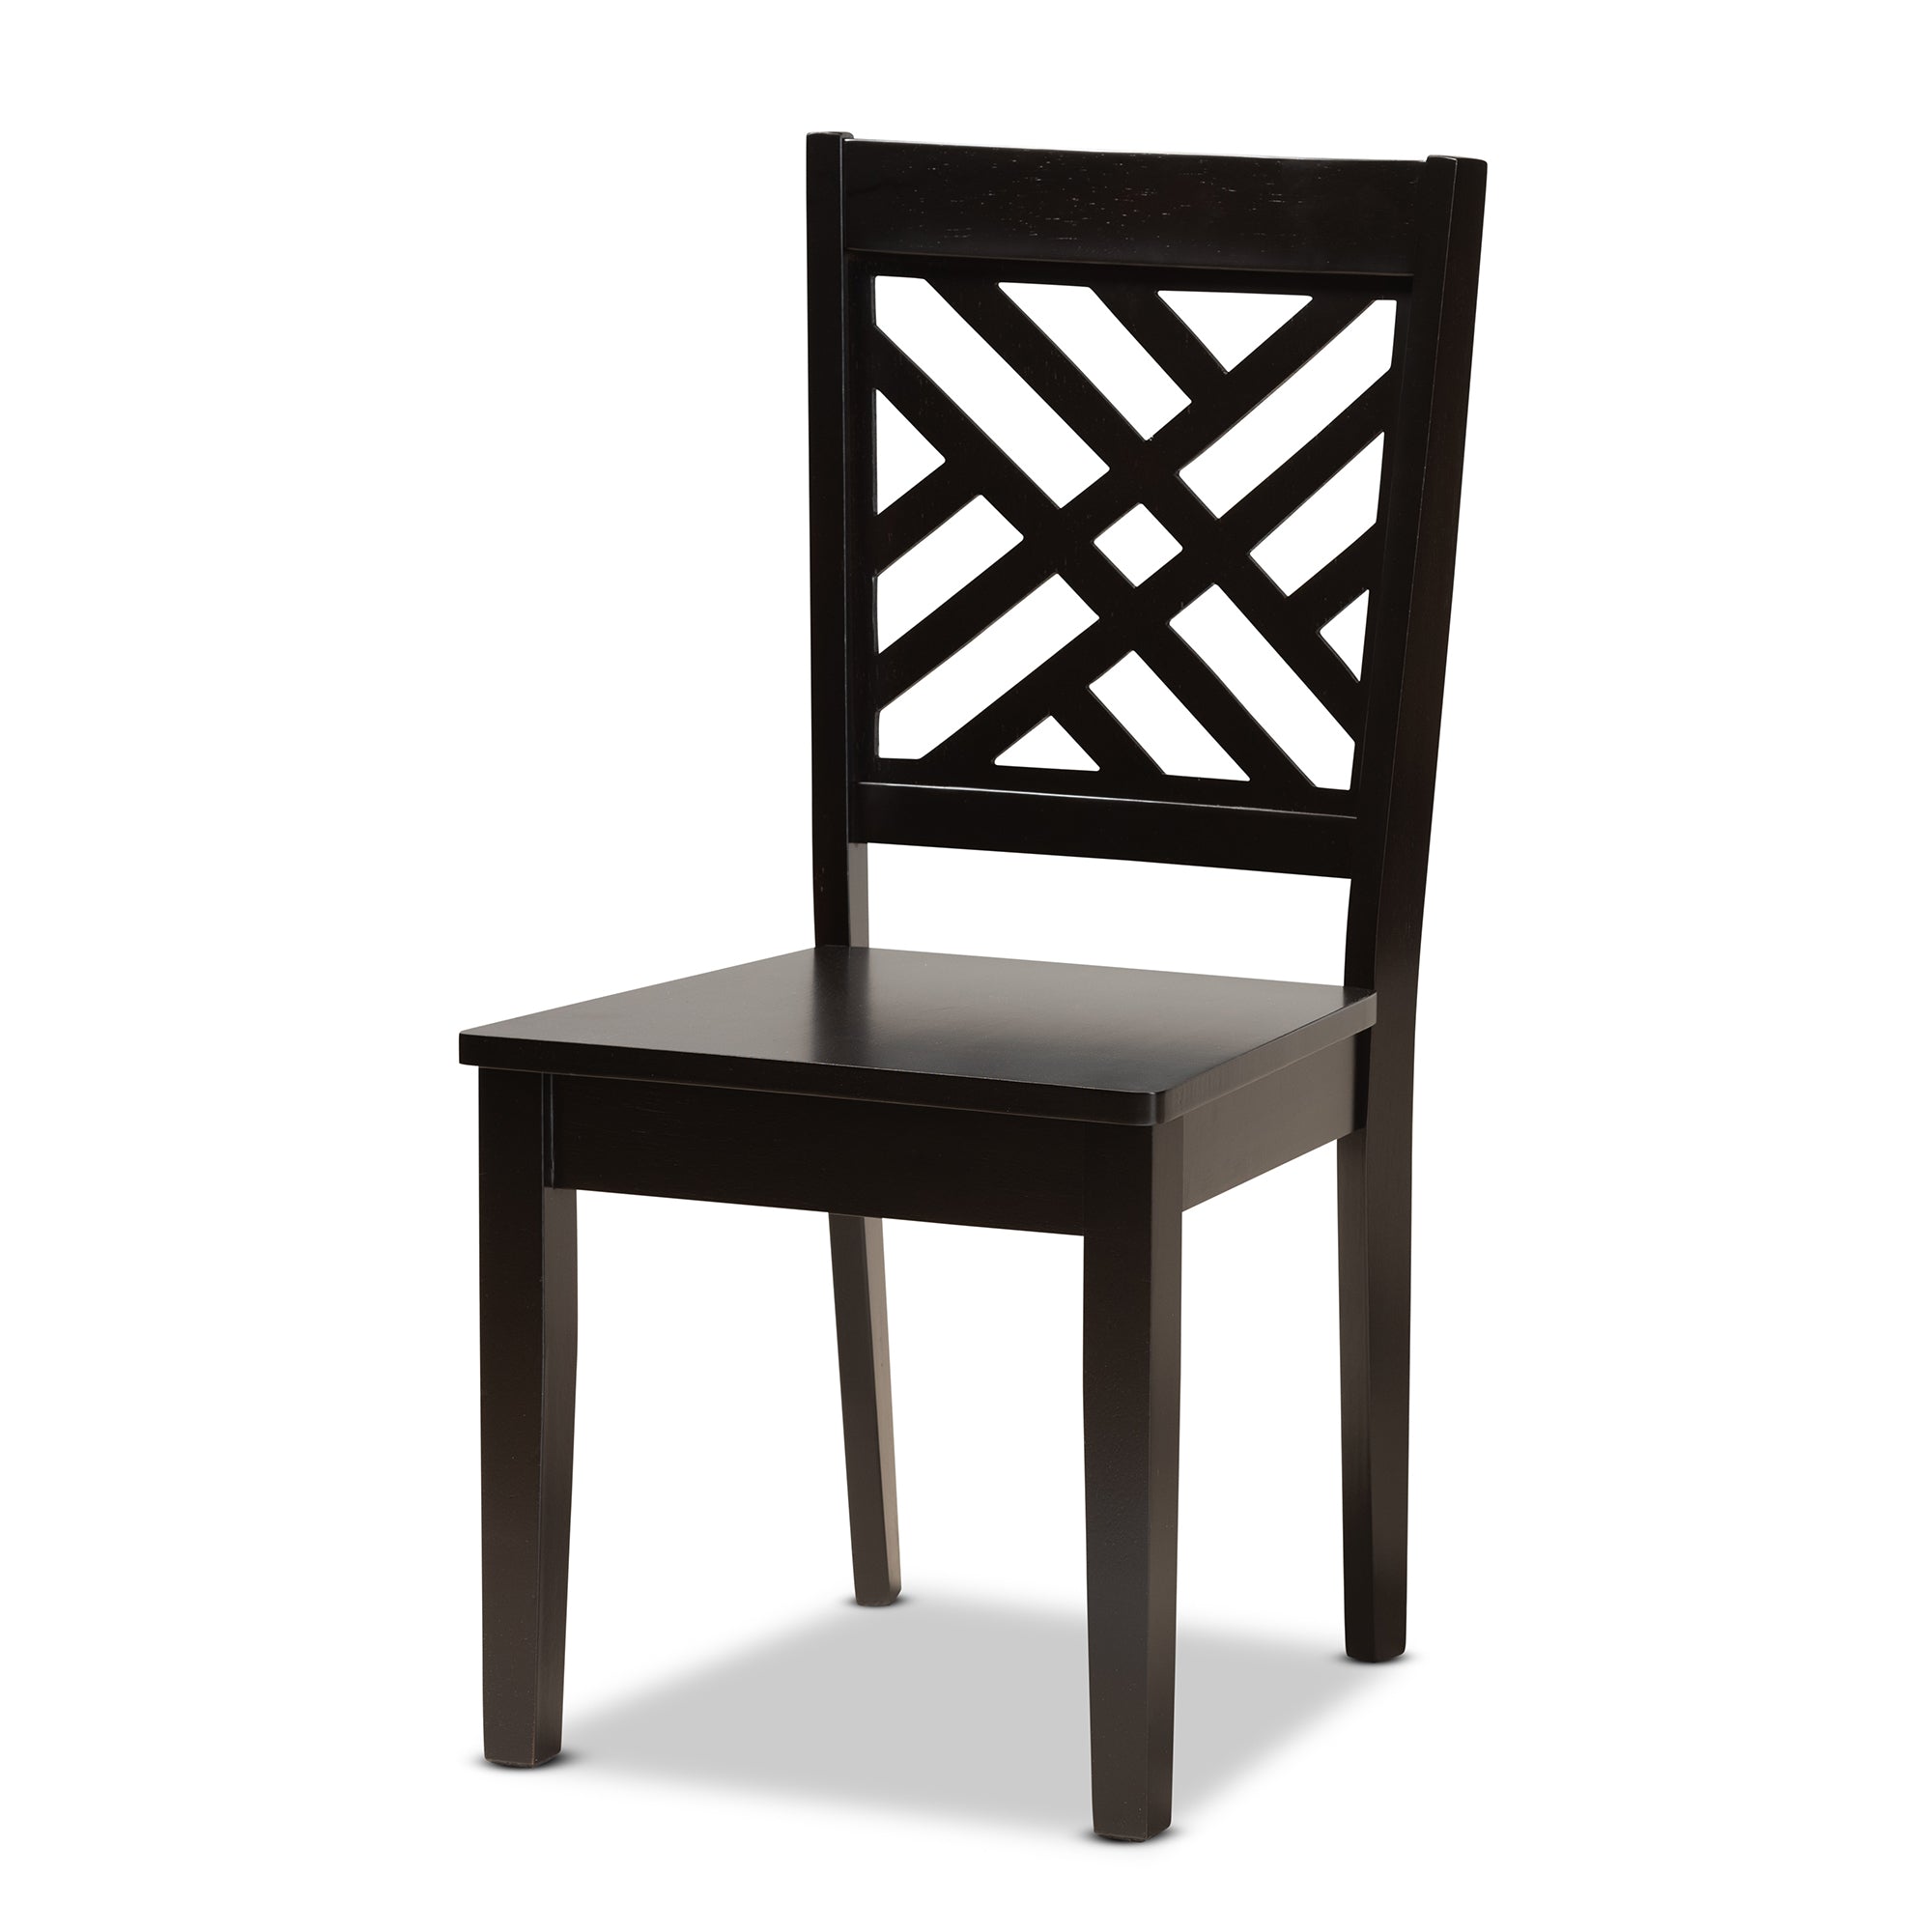 Ani Modern Dining Table & Six (6) Dining Chairs 7-Piece-Dining Set-Baxton Studio - WI-Wall2Wall Furnishings